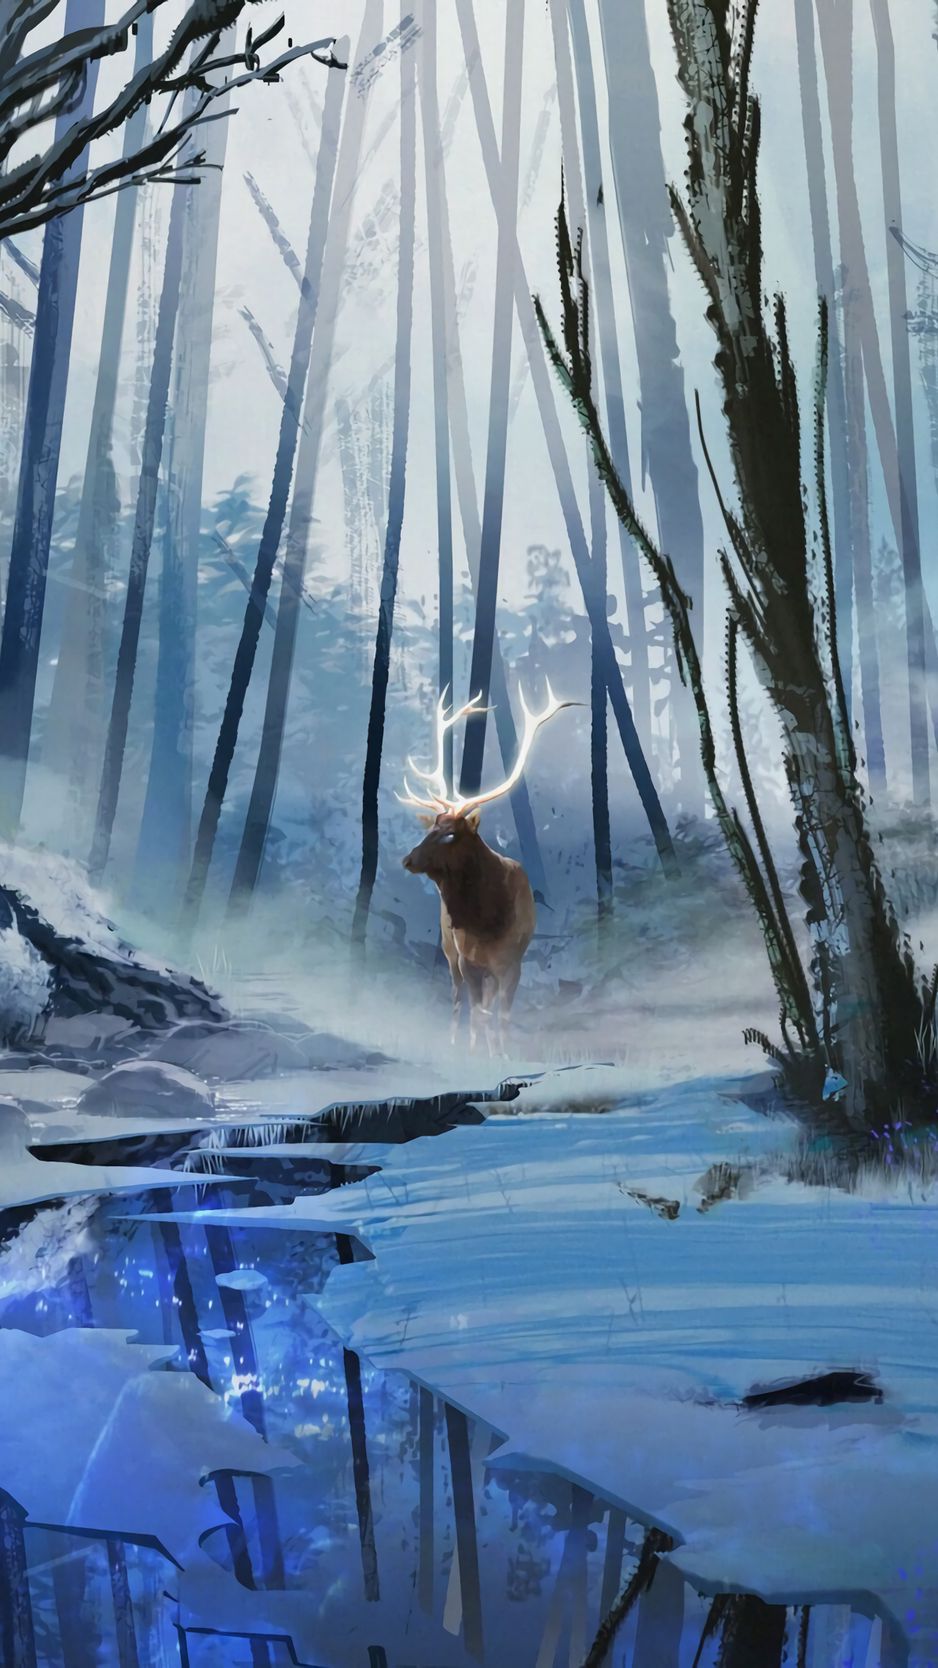 Download wallpaper 938x1668 deer, art, forest, river, winter